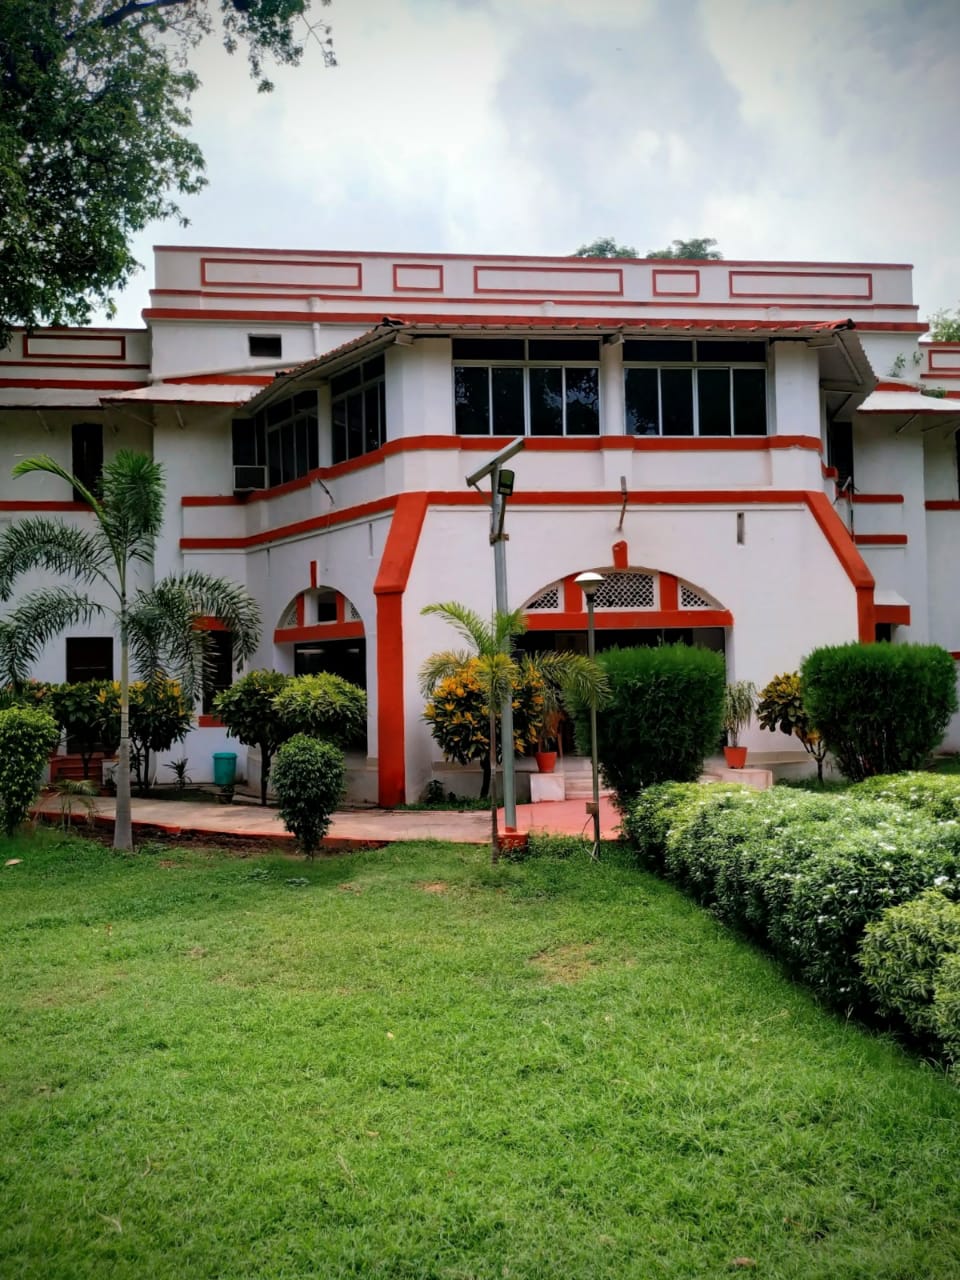 Front view of the Karpoori Thakur museum